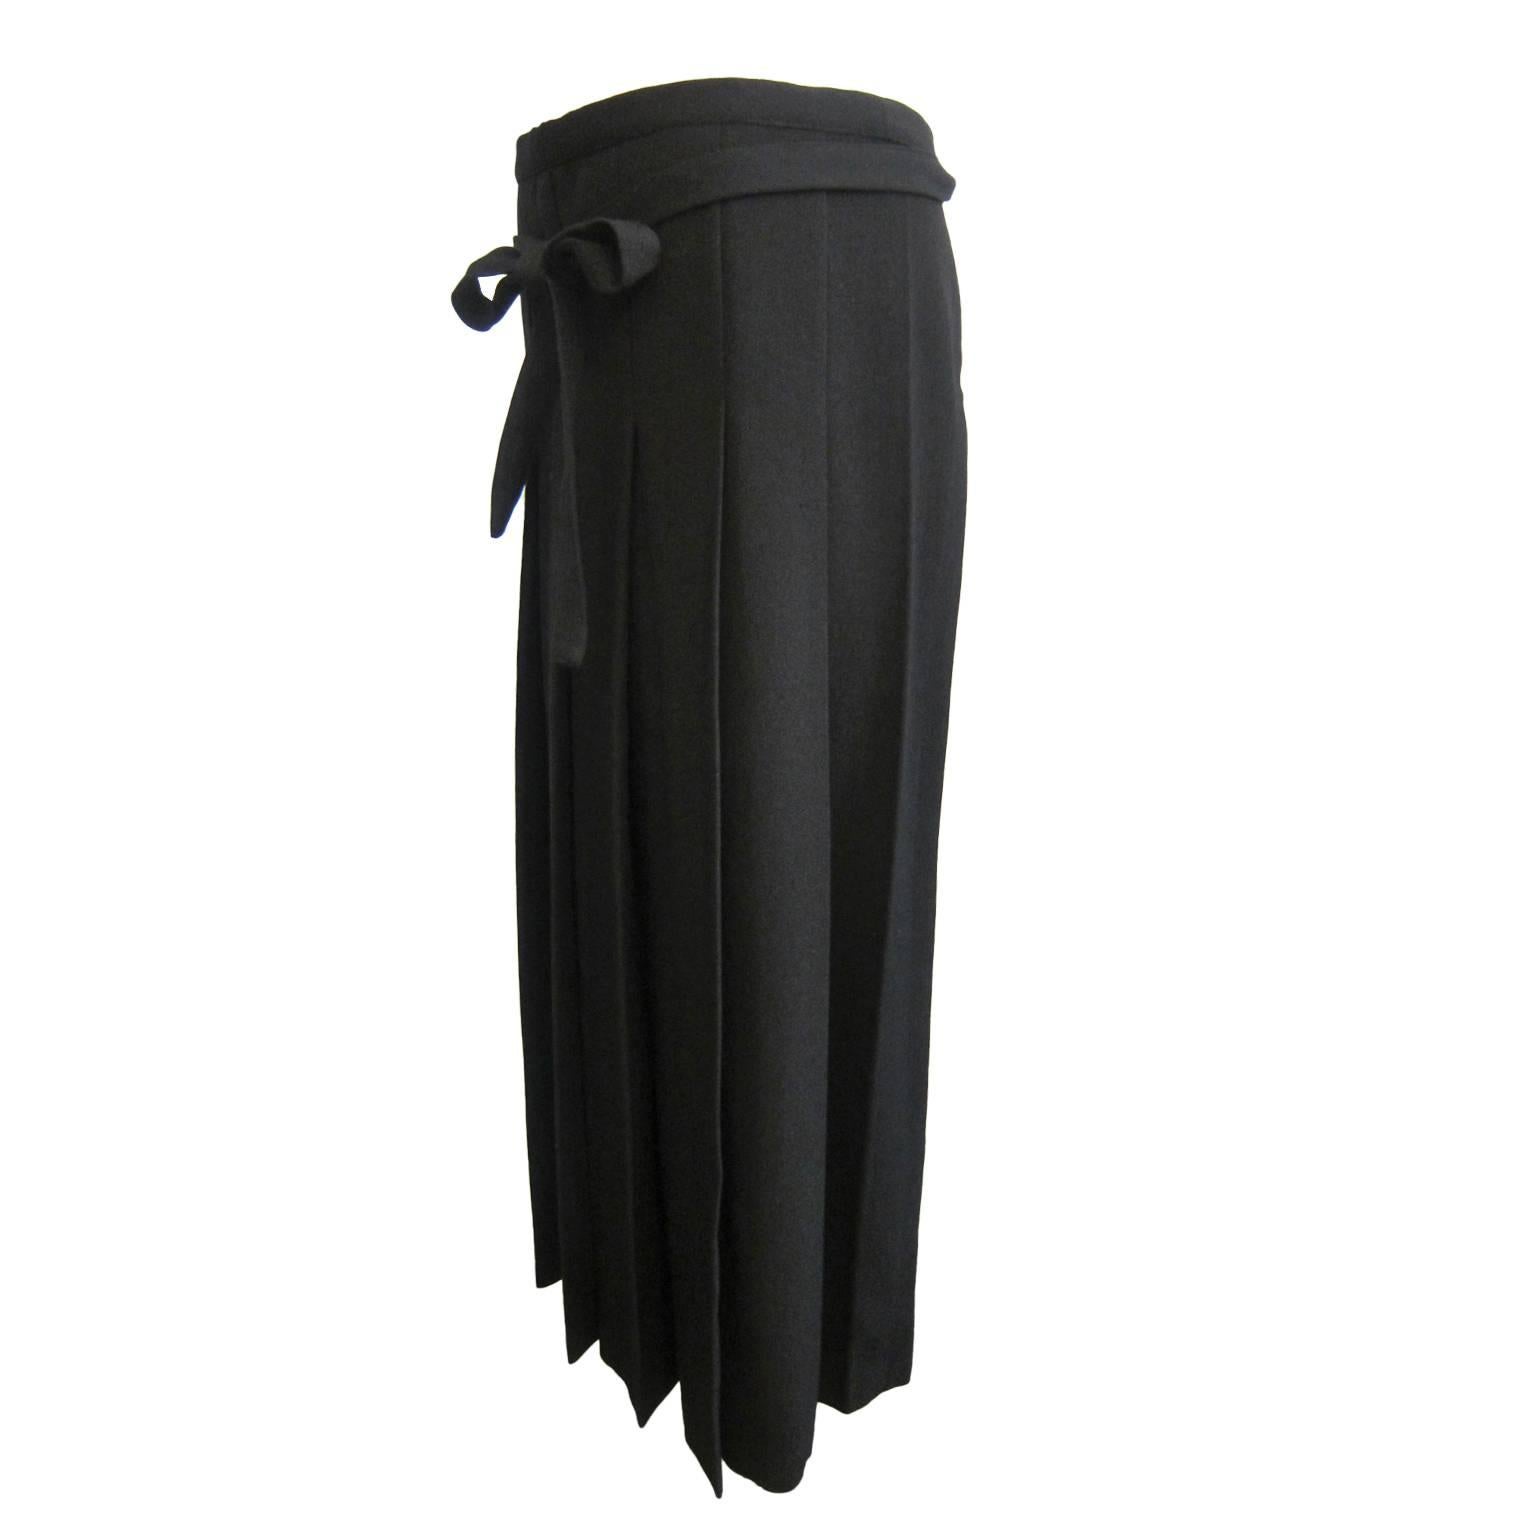 Comme des Garcons robe de chambre wide pleated wrap skirt AD 1998.
Measurements :
Width : 69
Length : 90 cm
Total length of top skirt incl. ties : 185 cm